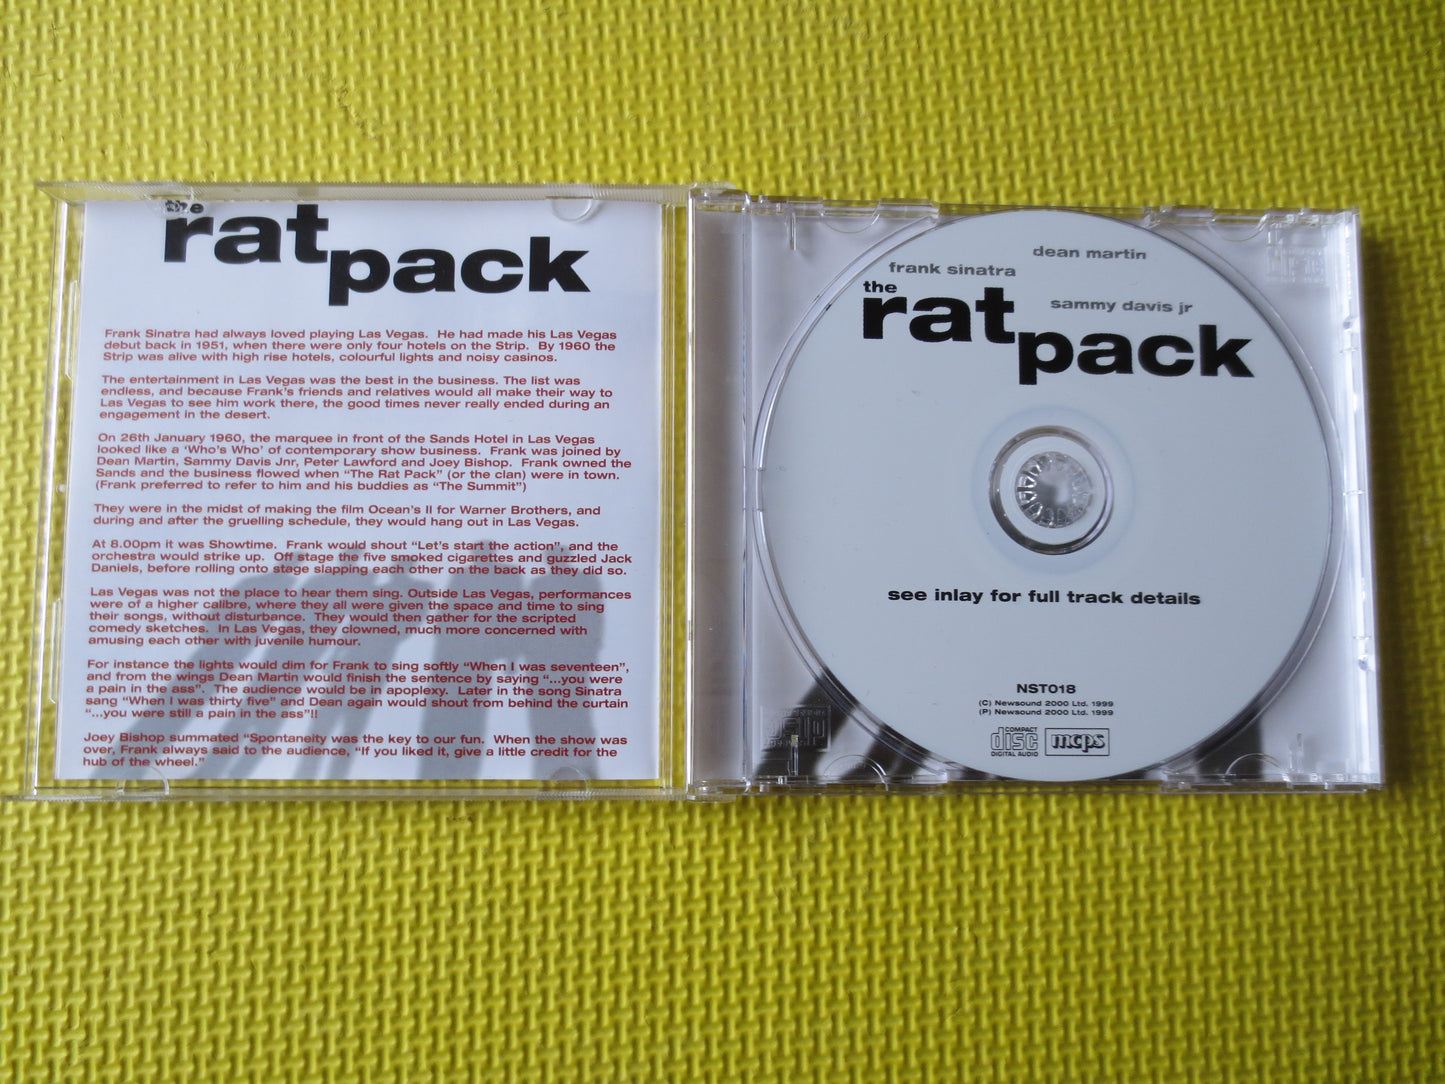 The RAT PACK, Frank SINATRA, Dean Mrtin Cd, Frank Sinatra Cd, Jazz Cd, Jazz Lp, Vintage Compact Disc, Sammy Davis Cd, 1999 Cds